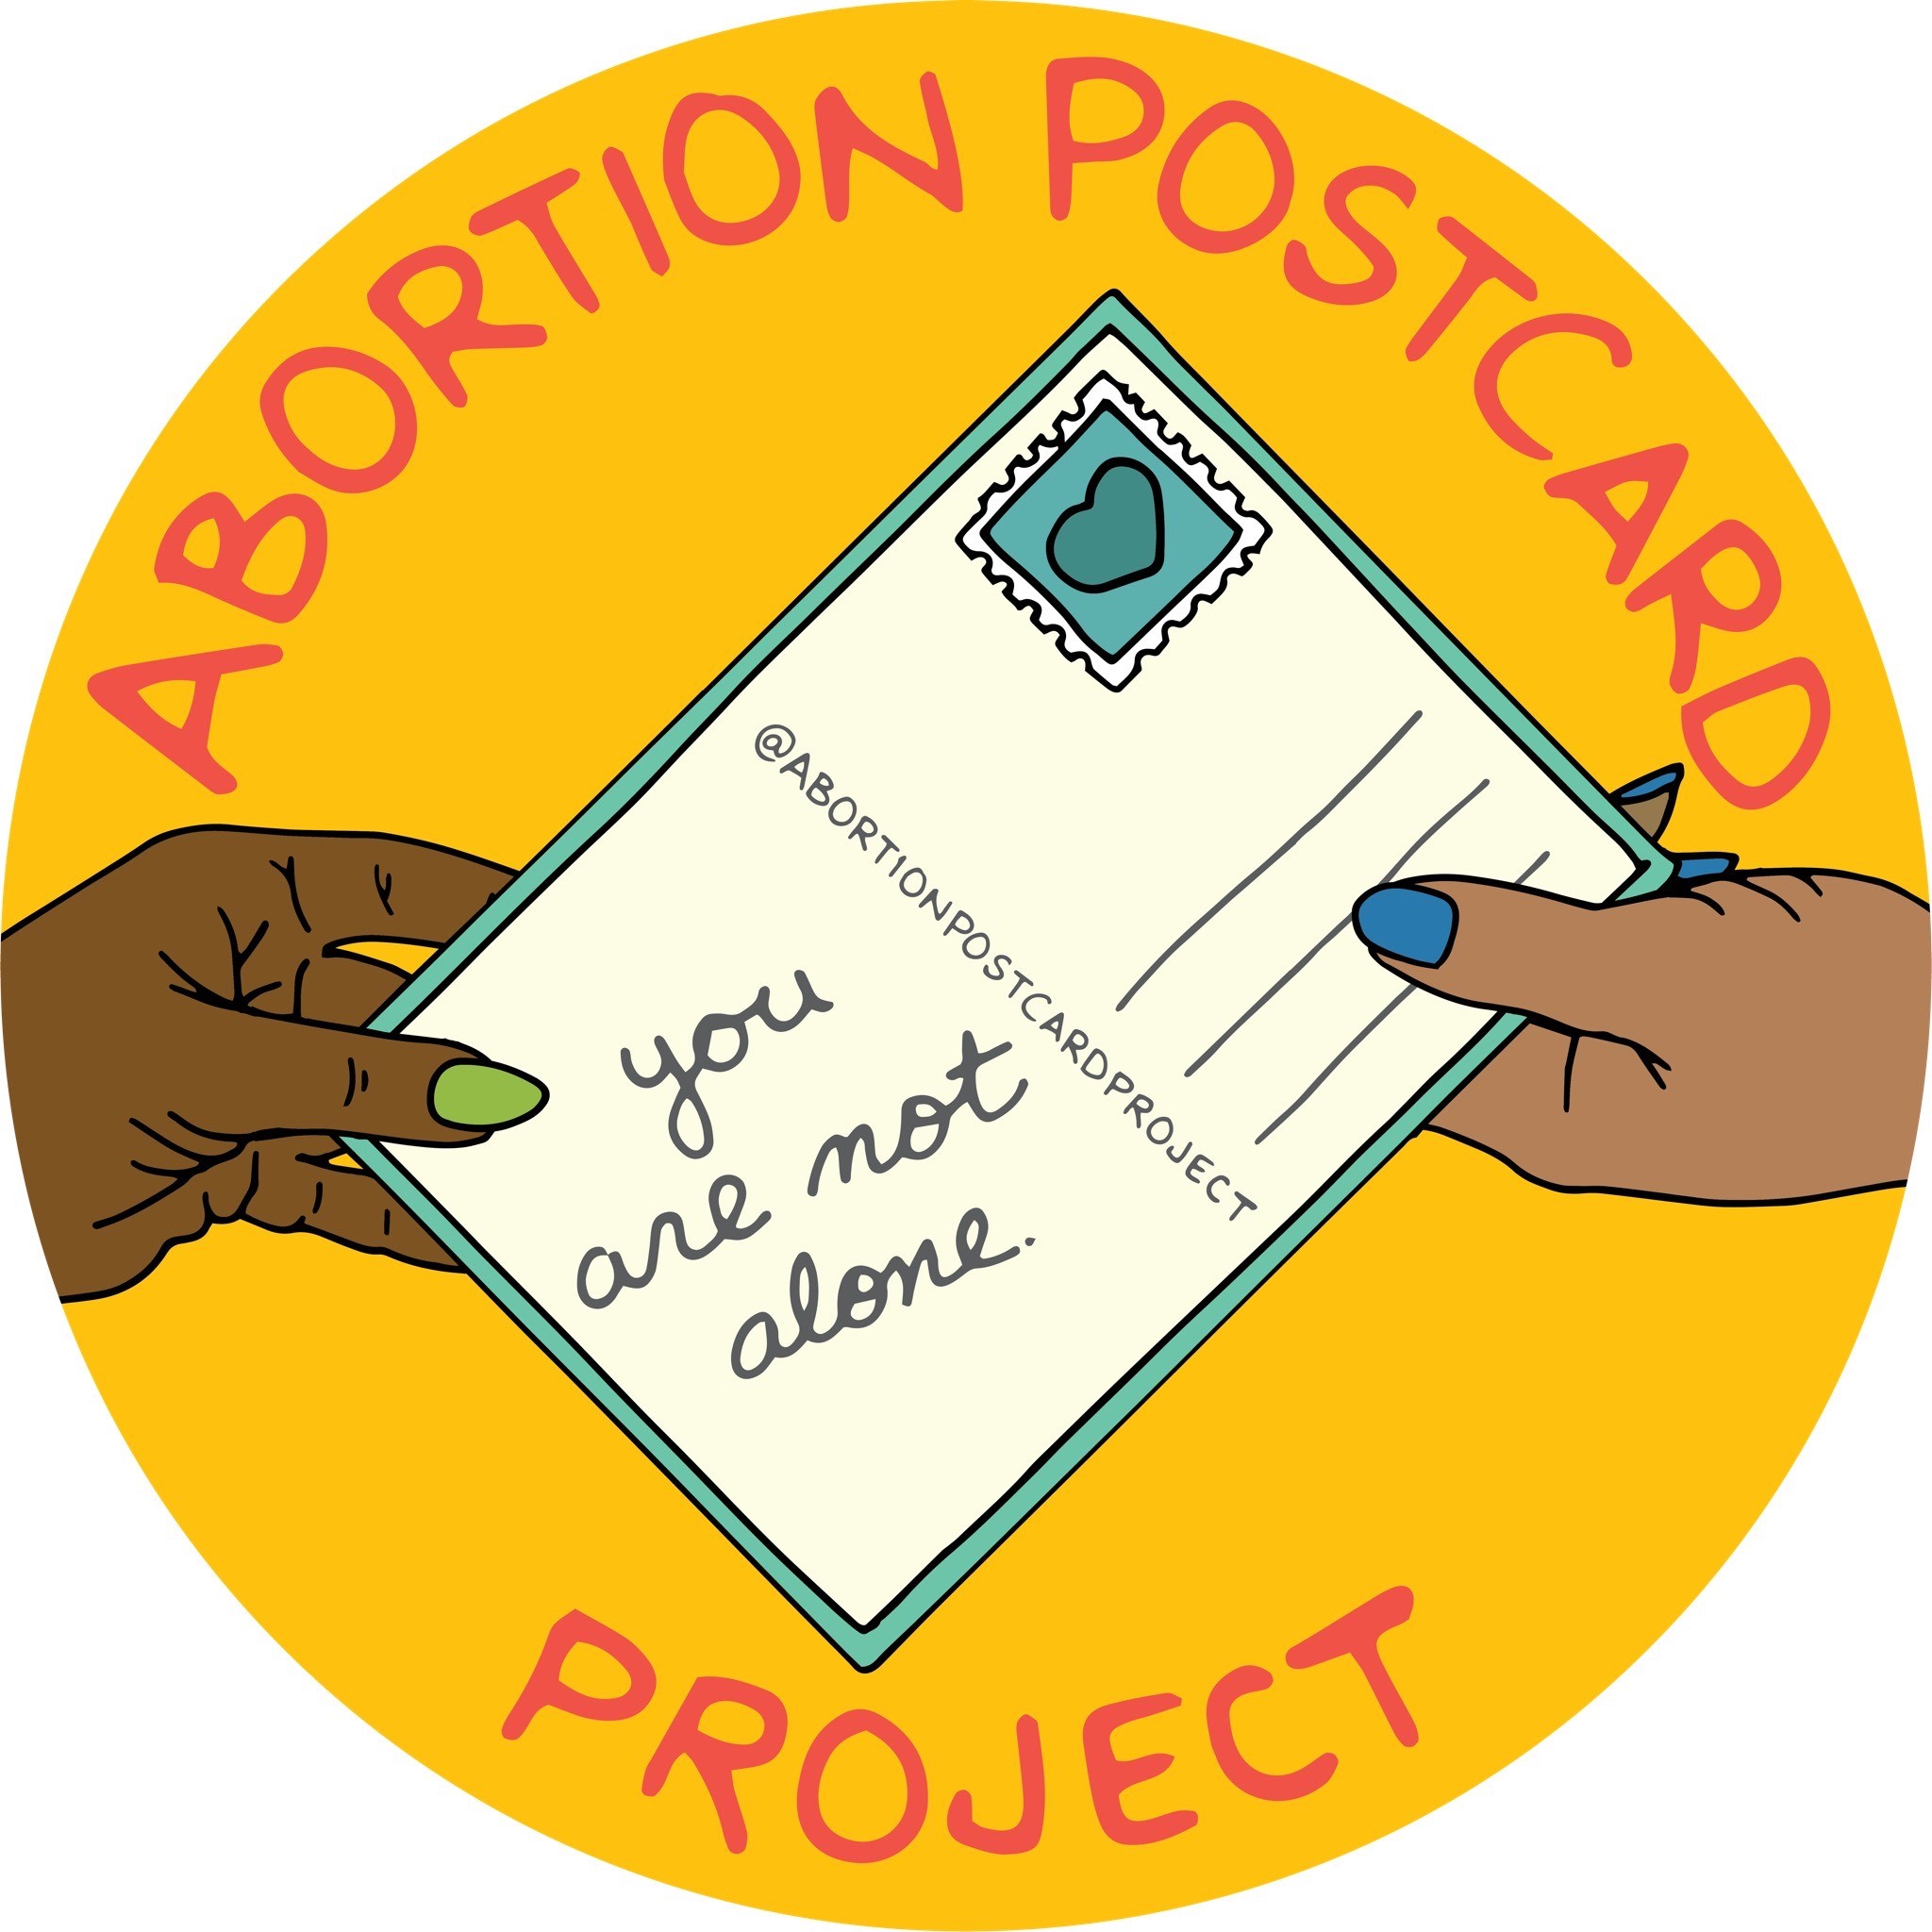 Abortion Postcard